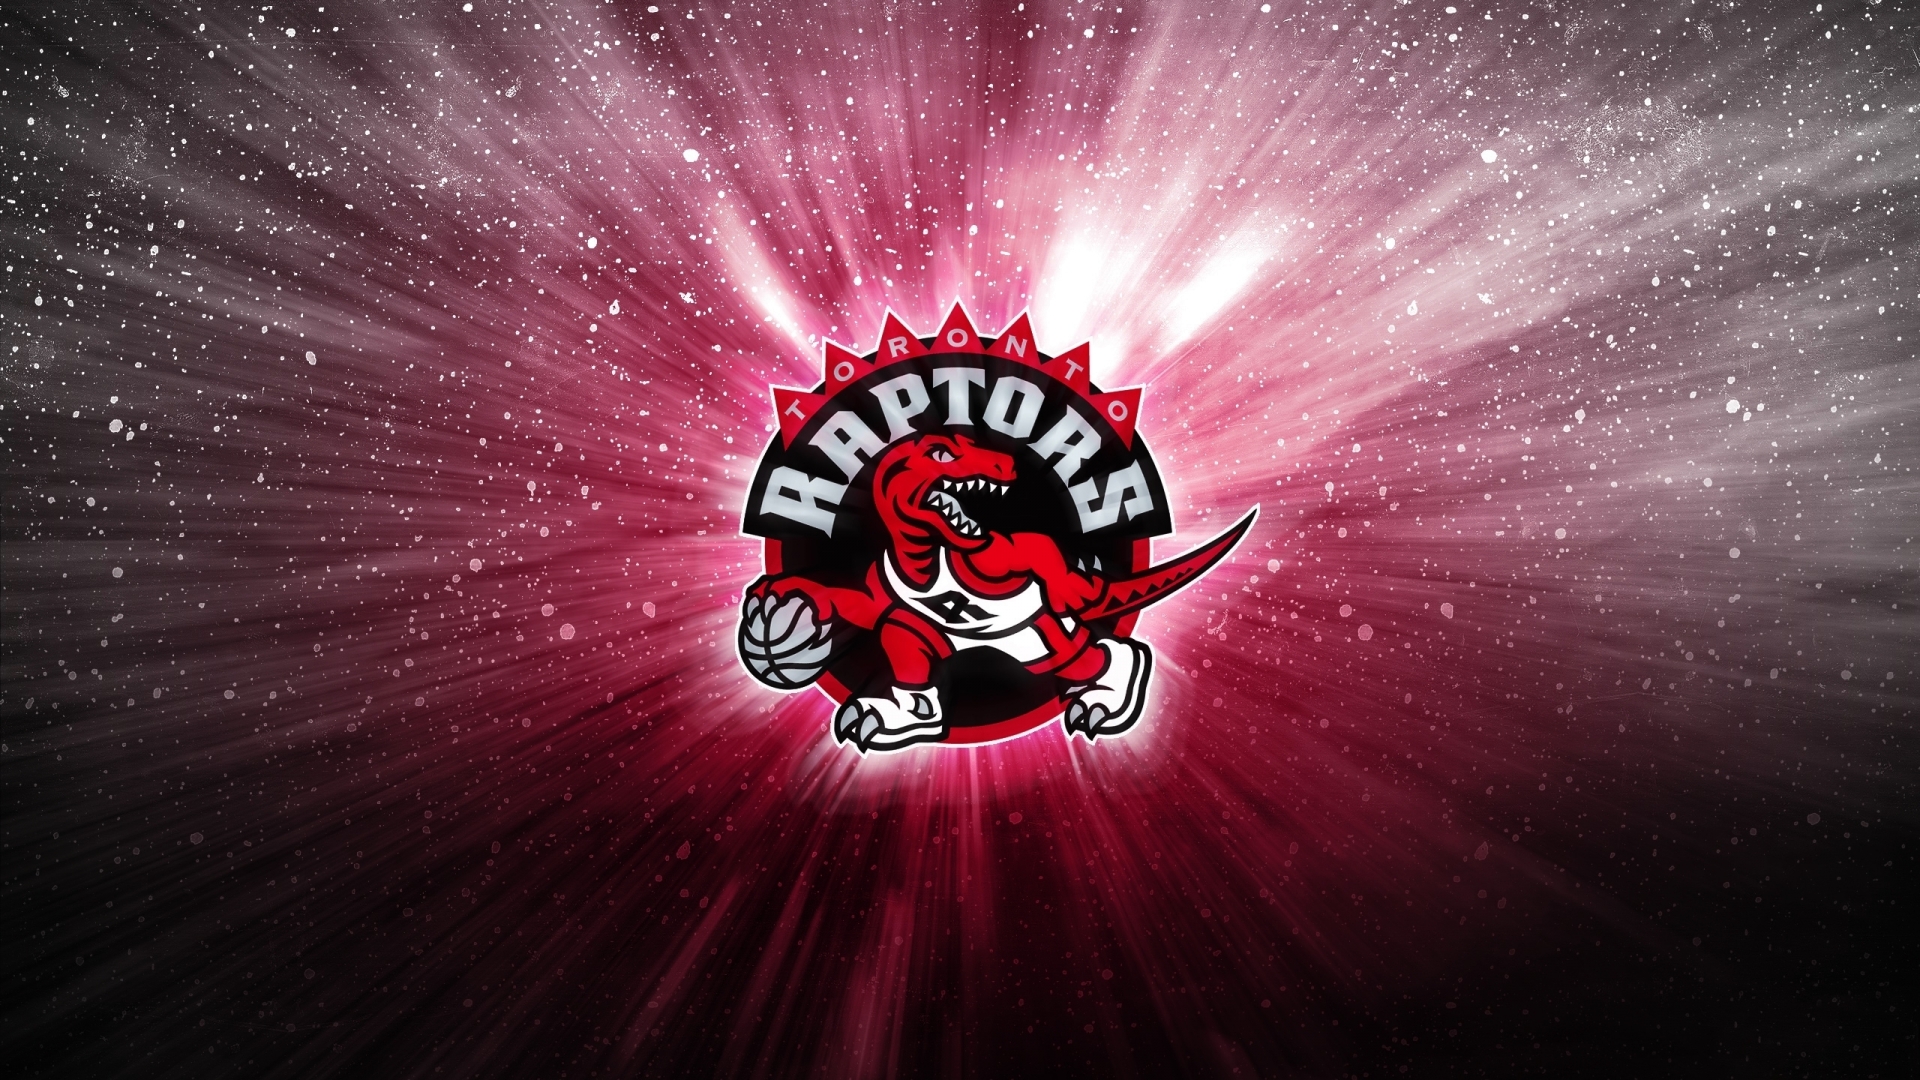 Toronto Raptors Logo for 1920 x 1080 HDTV 1080p resolution